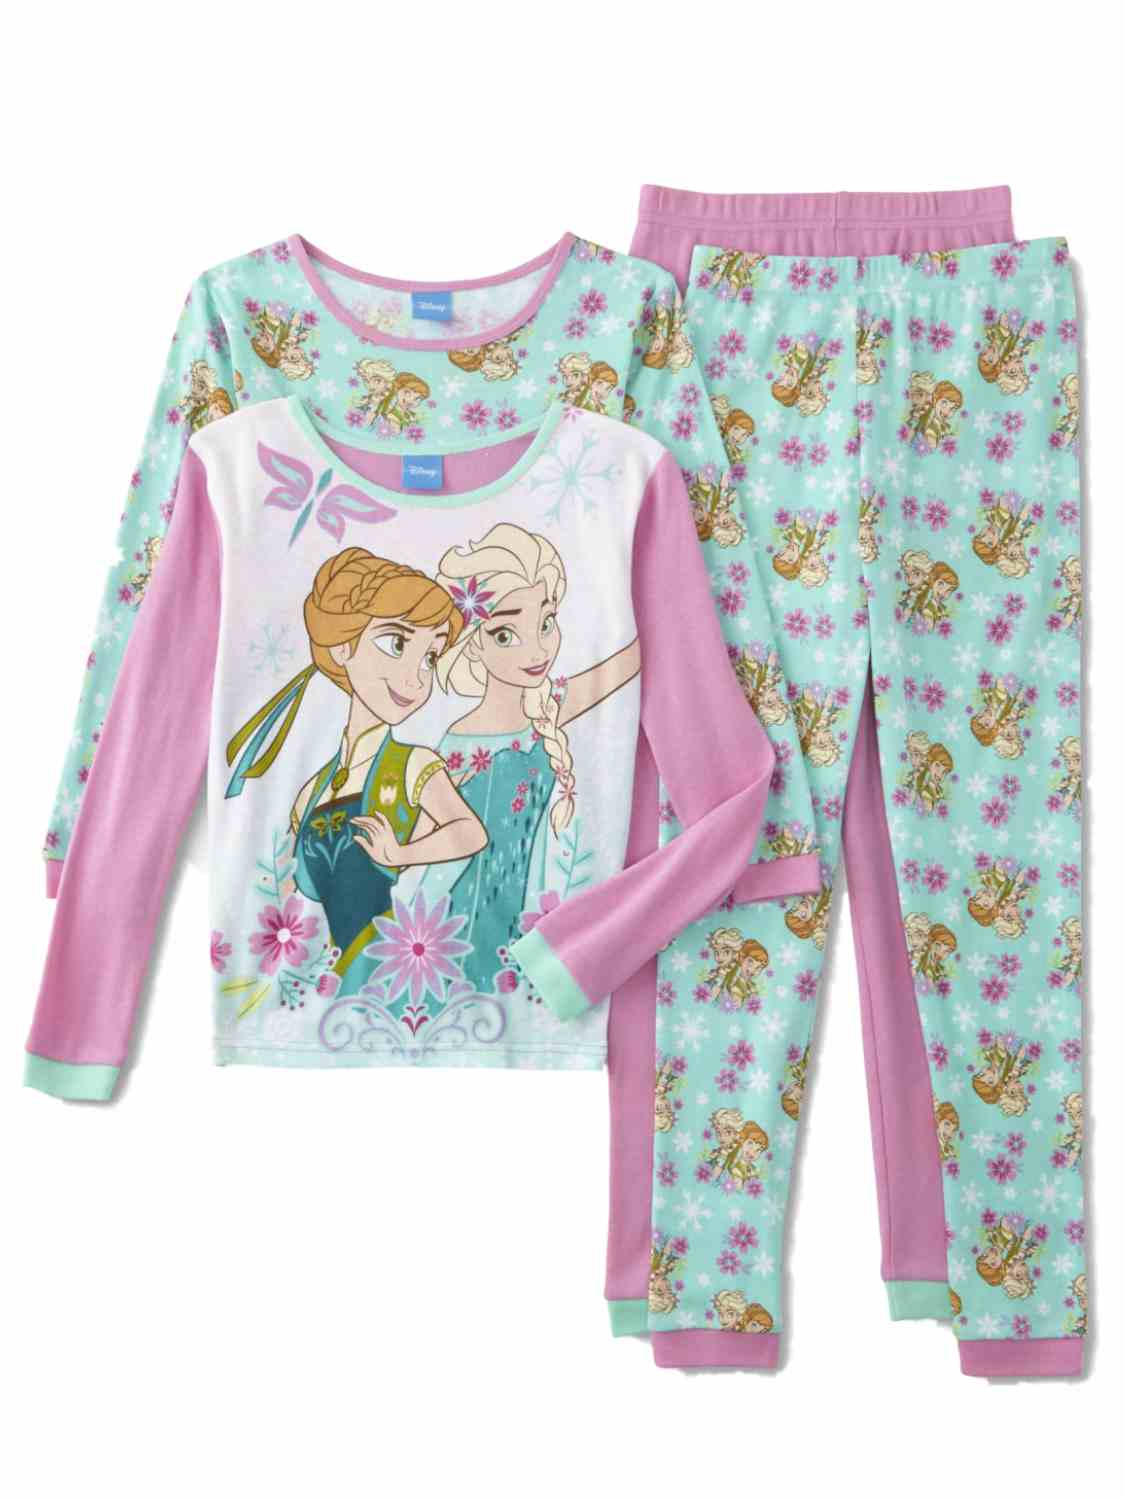 Disney Frozen Girls 4 Piece Sleep Set Princess Elsa & Anna Knit Pajamas 10 - image 1 of 1